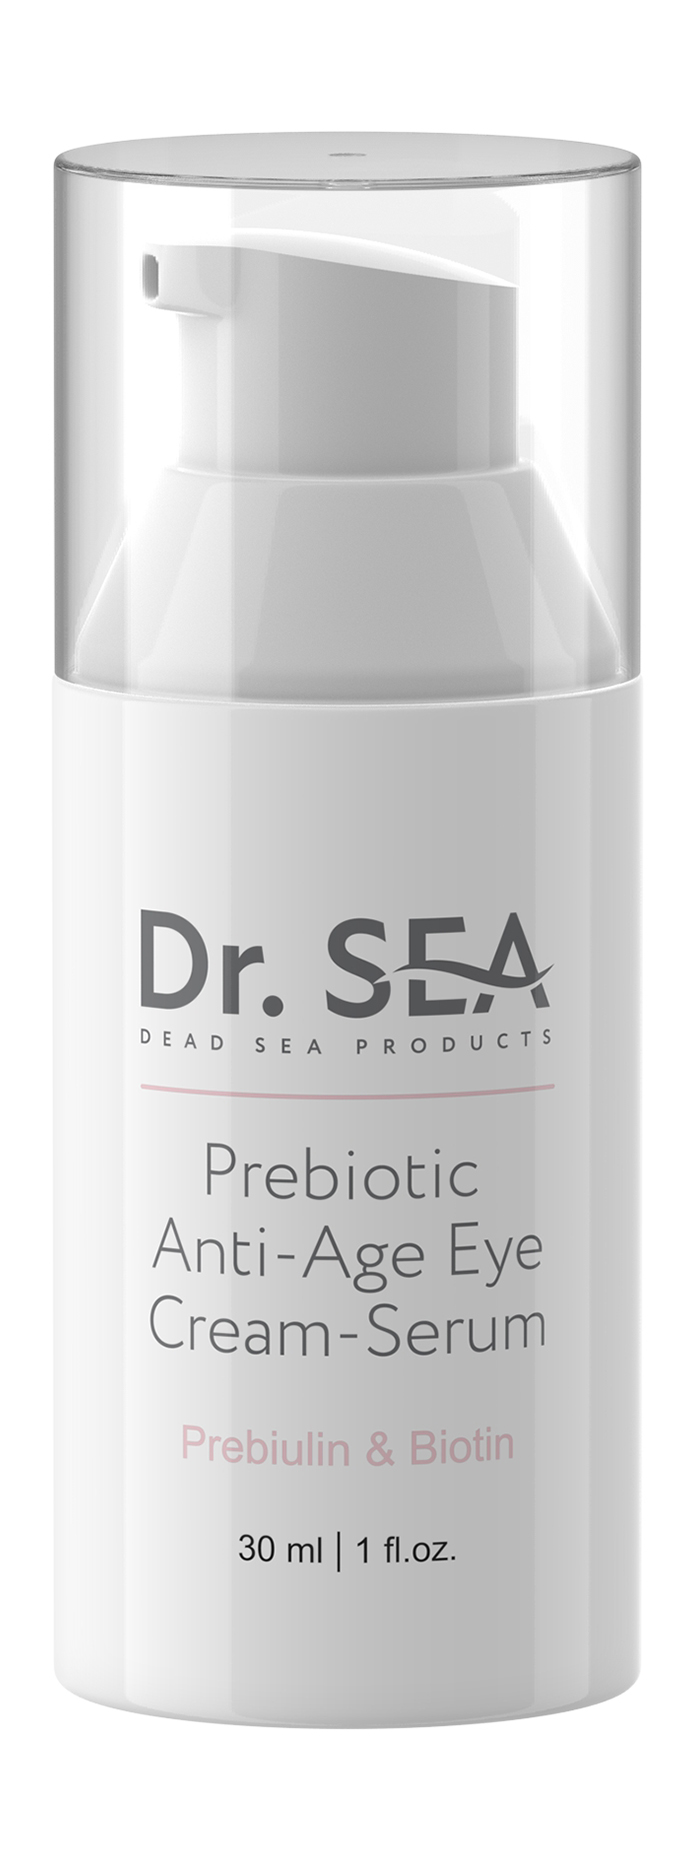 Сыворотка-крем для области вокруг глаз DrSea Prebiotic Anti-Age Eye Cream-Serum mileo сыворотка для лица пост акне восстановление микробиома mileo 50 мл